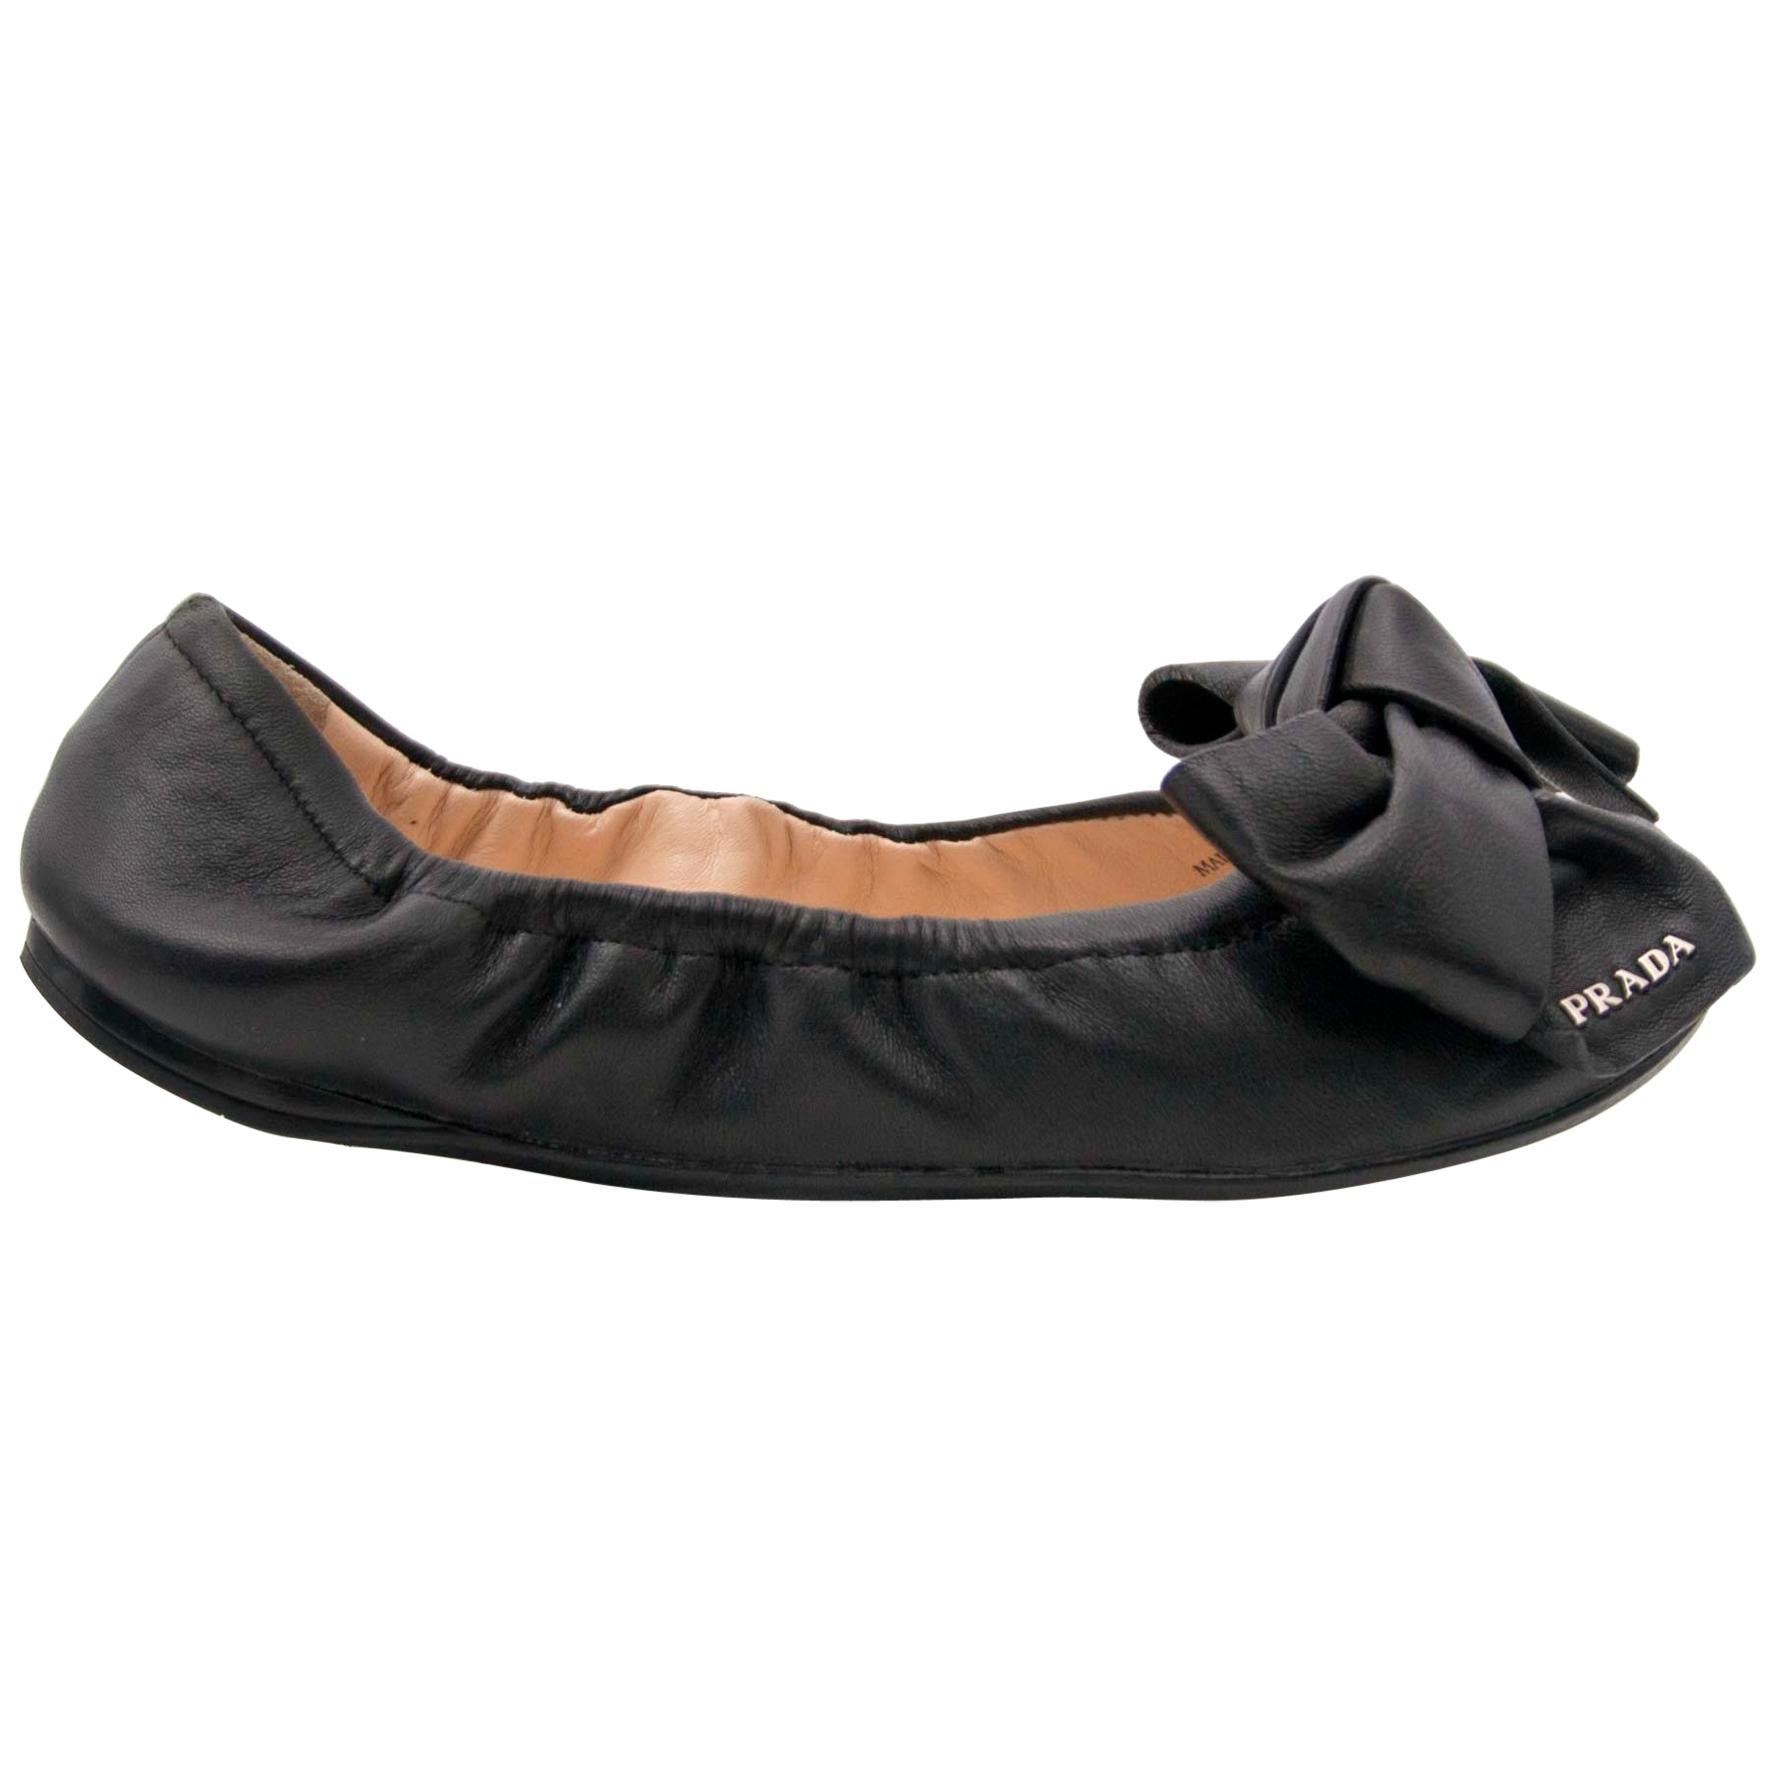 Prada Black Leather Bow Ballerina Flats - Size 35, 5